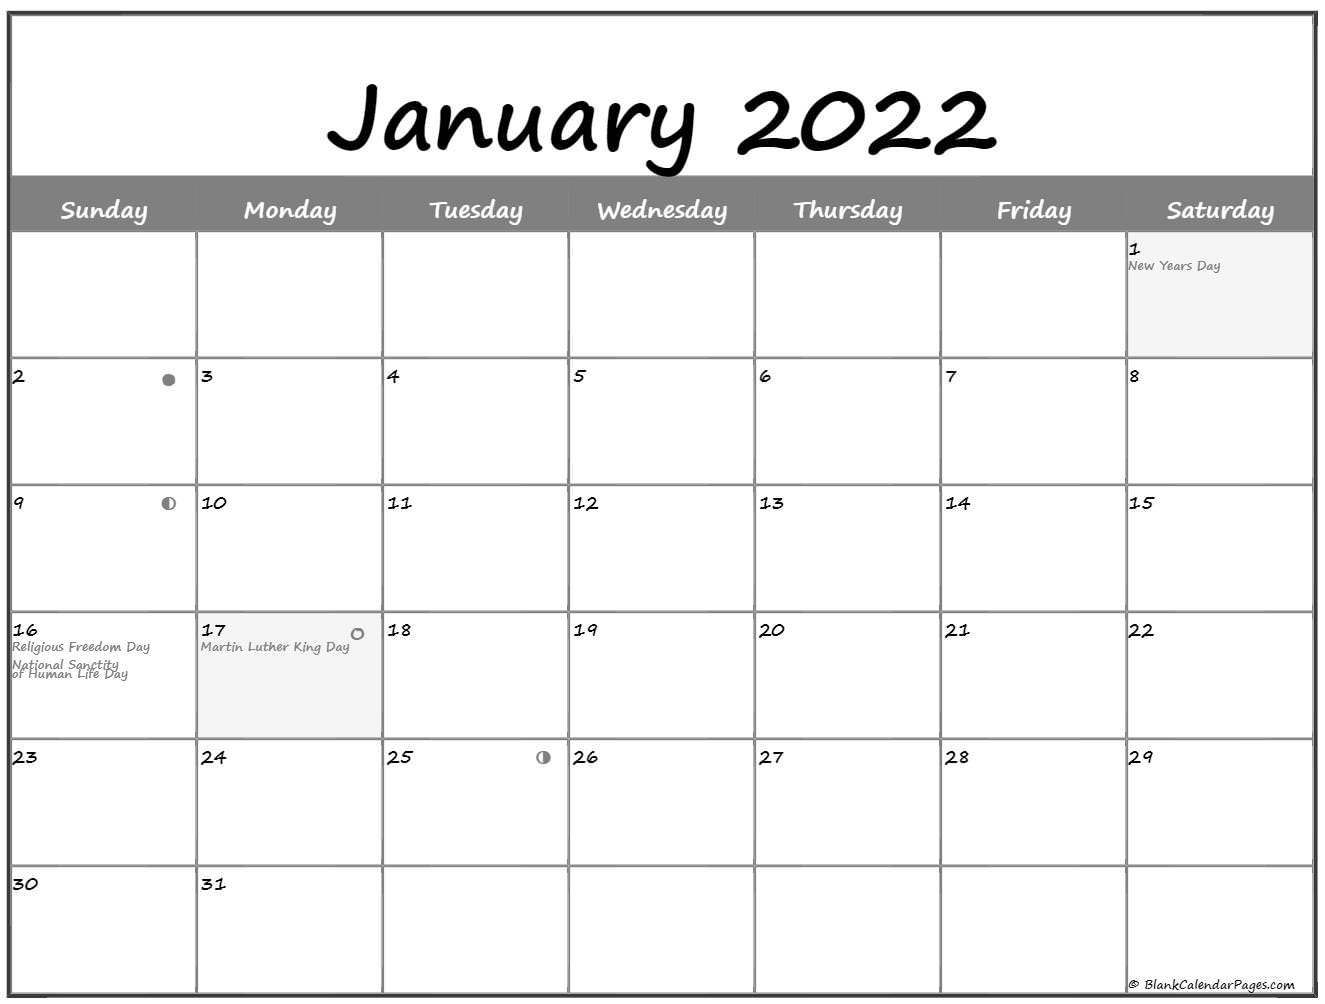 Get Calendar 2022 January Holidays